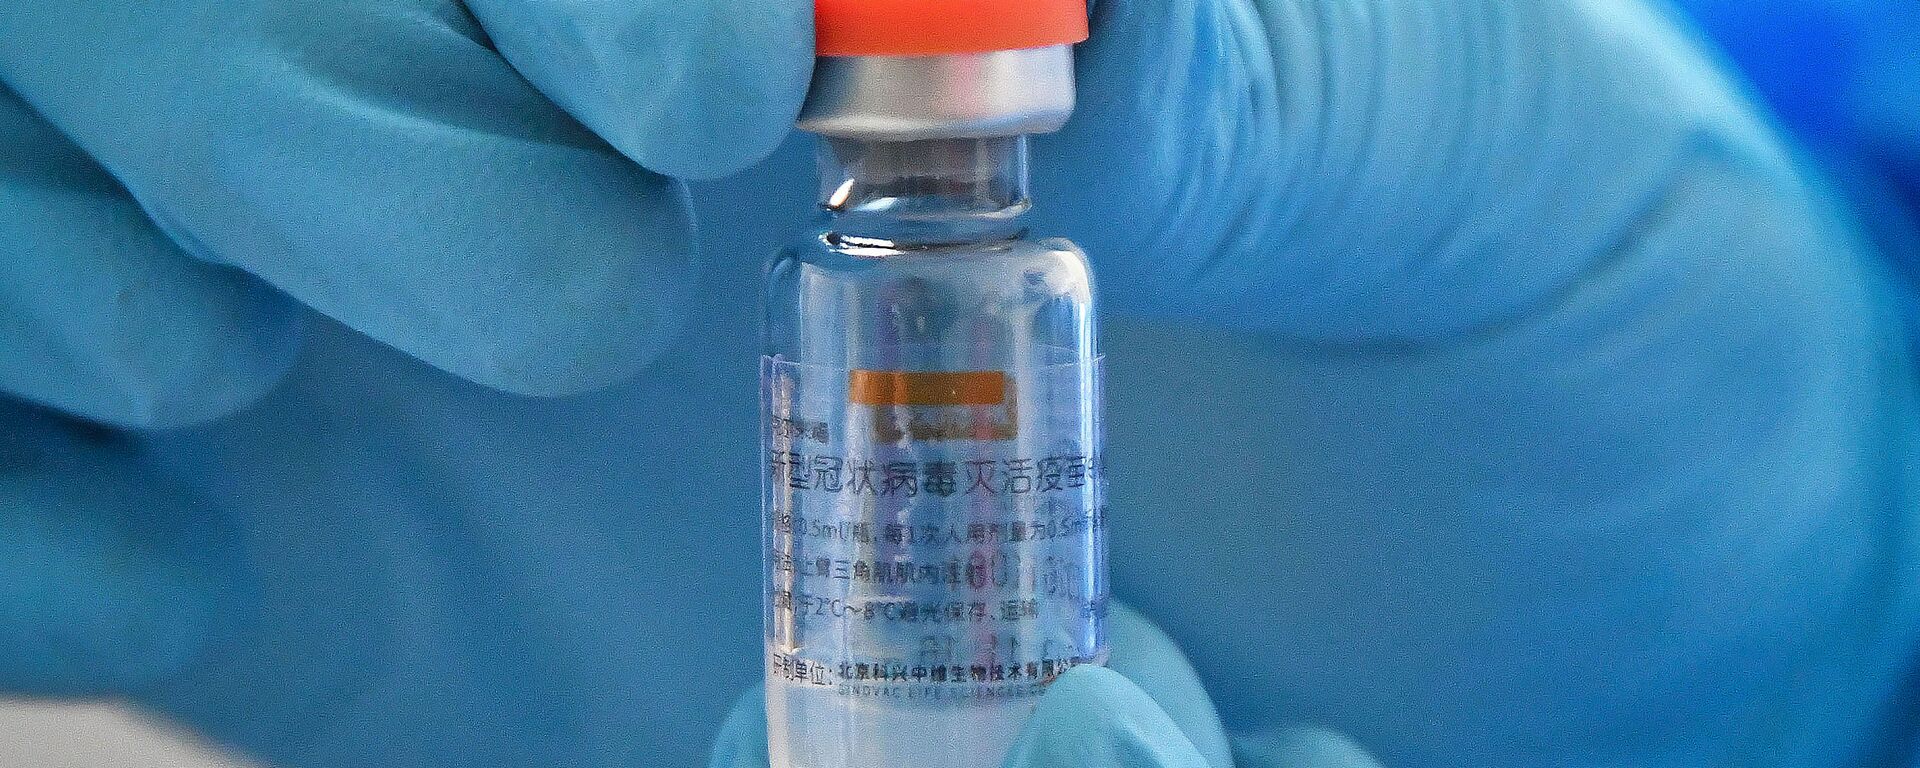 Vacuna contra el COVID-19 de Sinovac - Sputnik Mundo, 1920, 01.02.2021